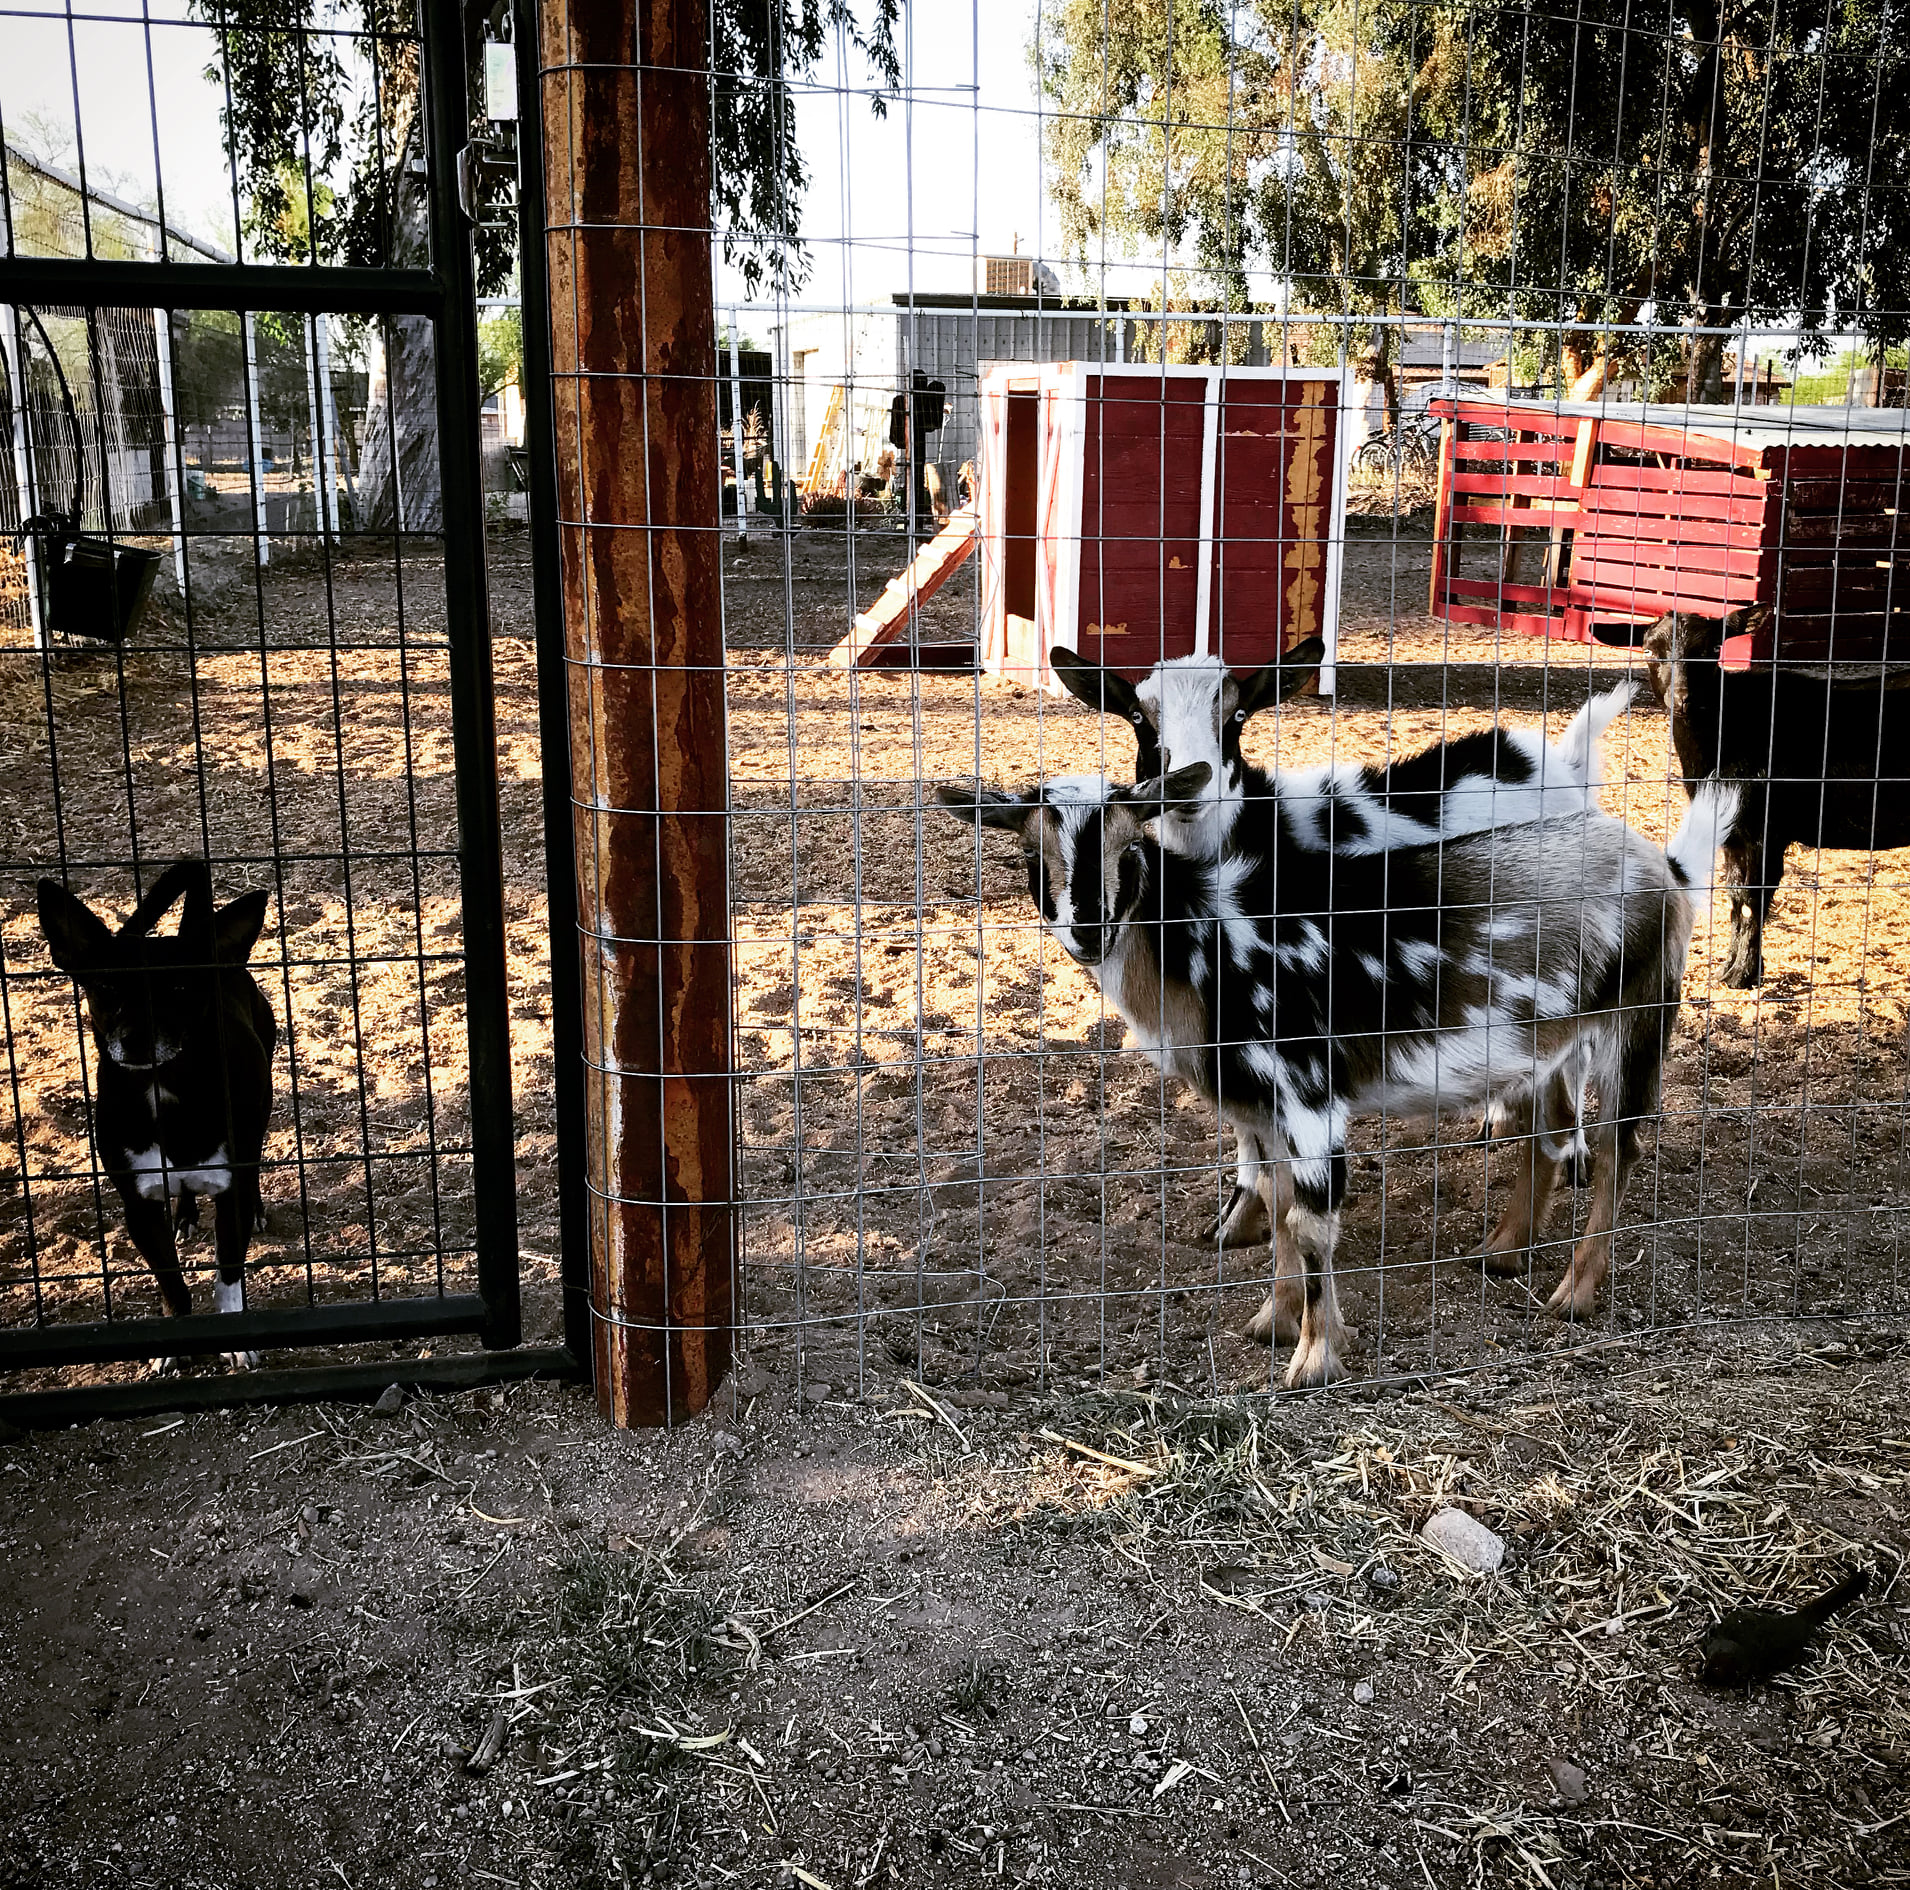 nigerian dwarf goats and little dog behind a fence in my backyard